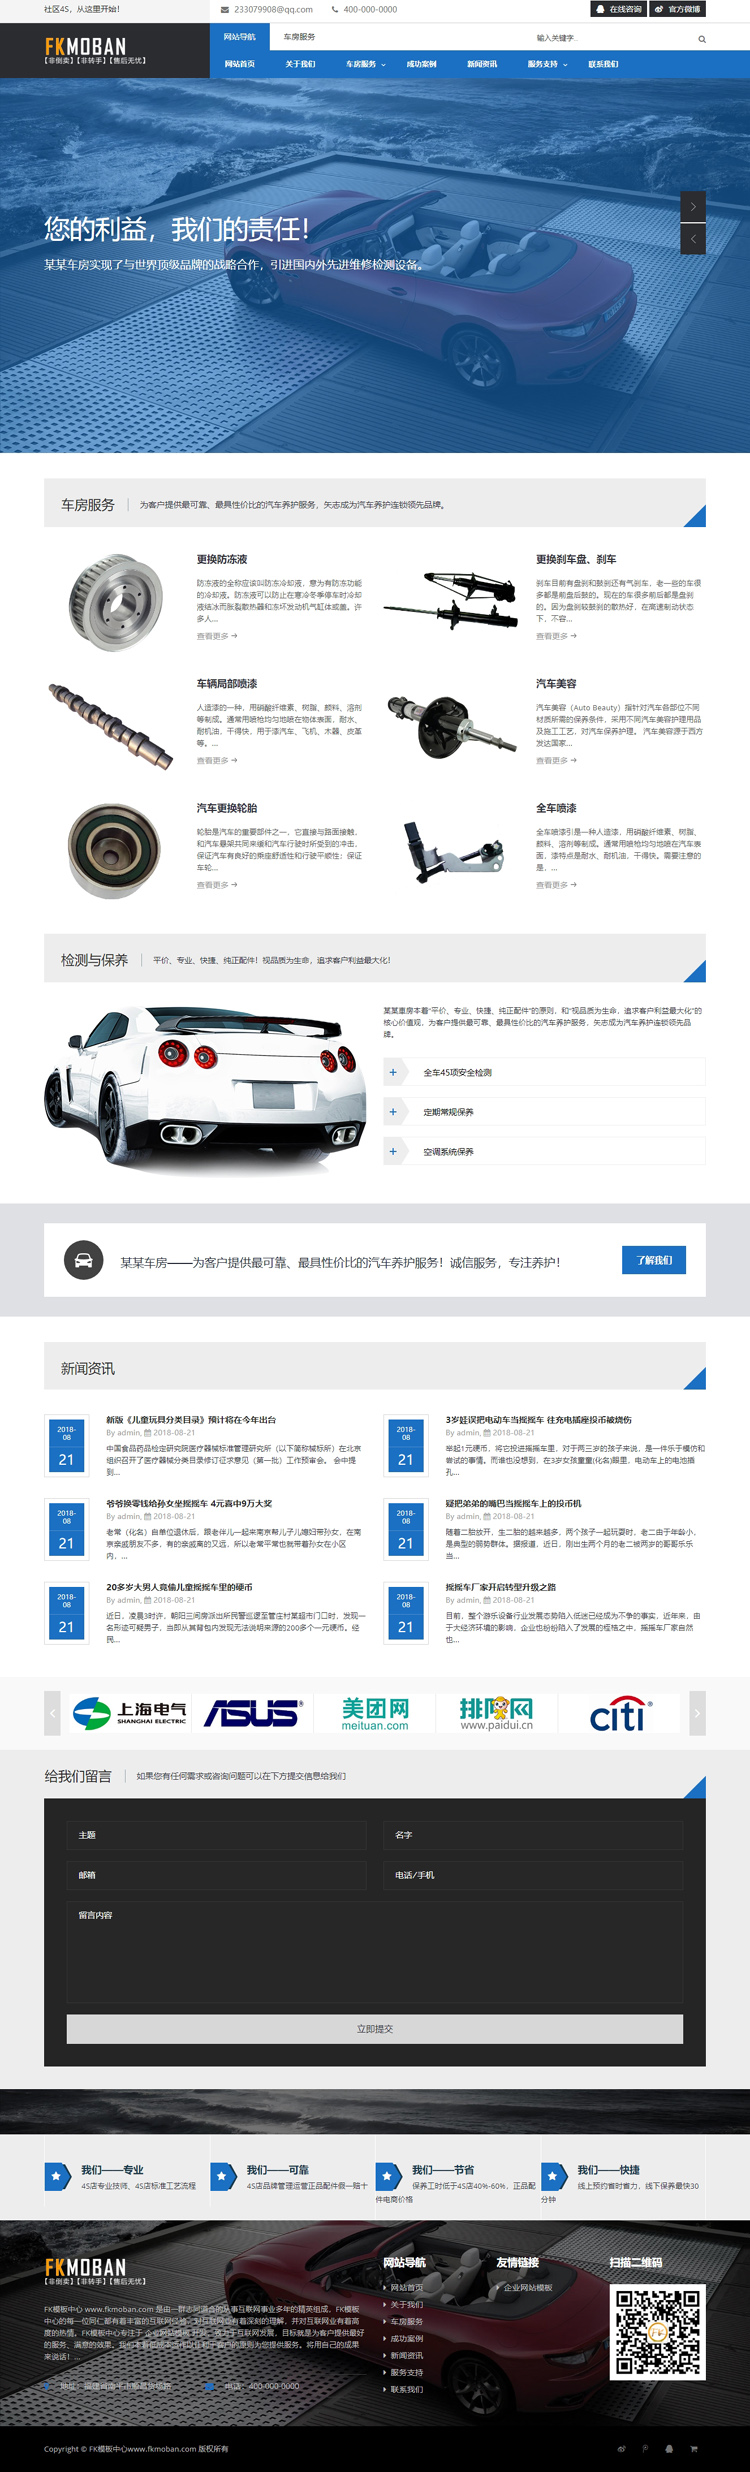 【DedeCMS织梦模板下载】 汽修网站源码 HTML5自适应汽车保养服务网站模板插图